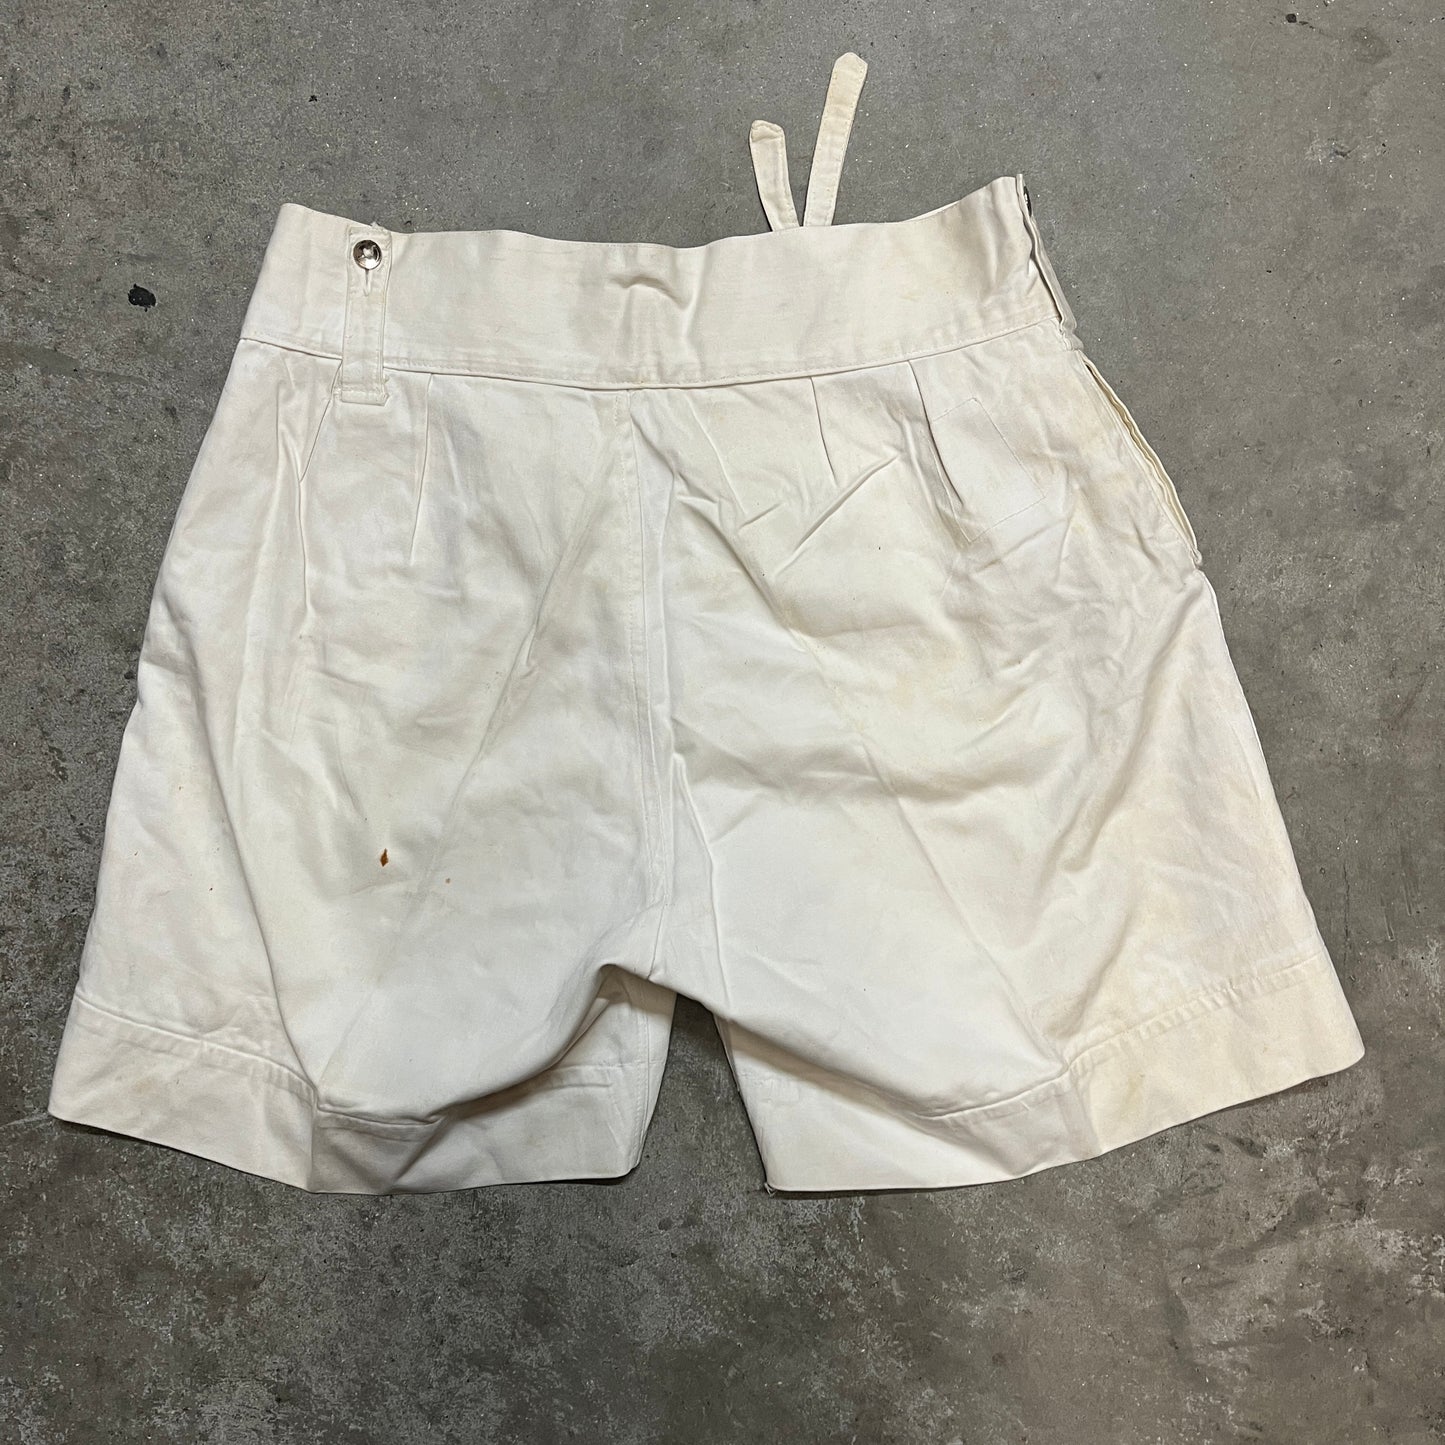 Post WW2 1950s Royal Navy White Cotton Drill Shorts